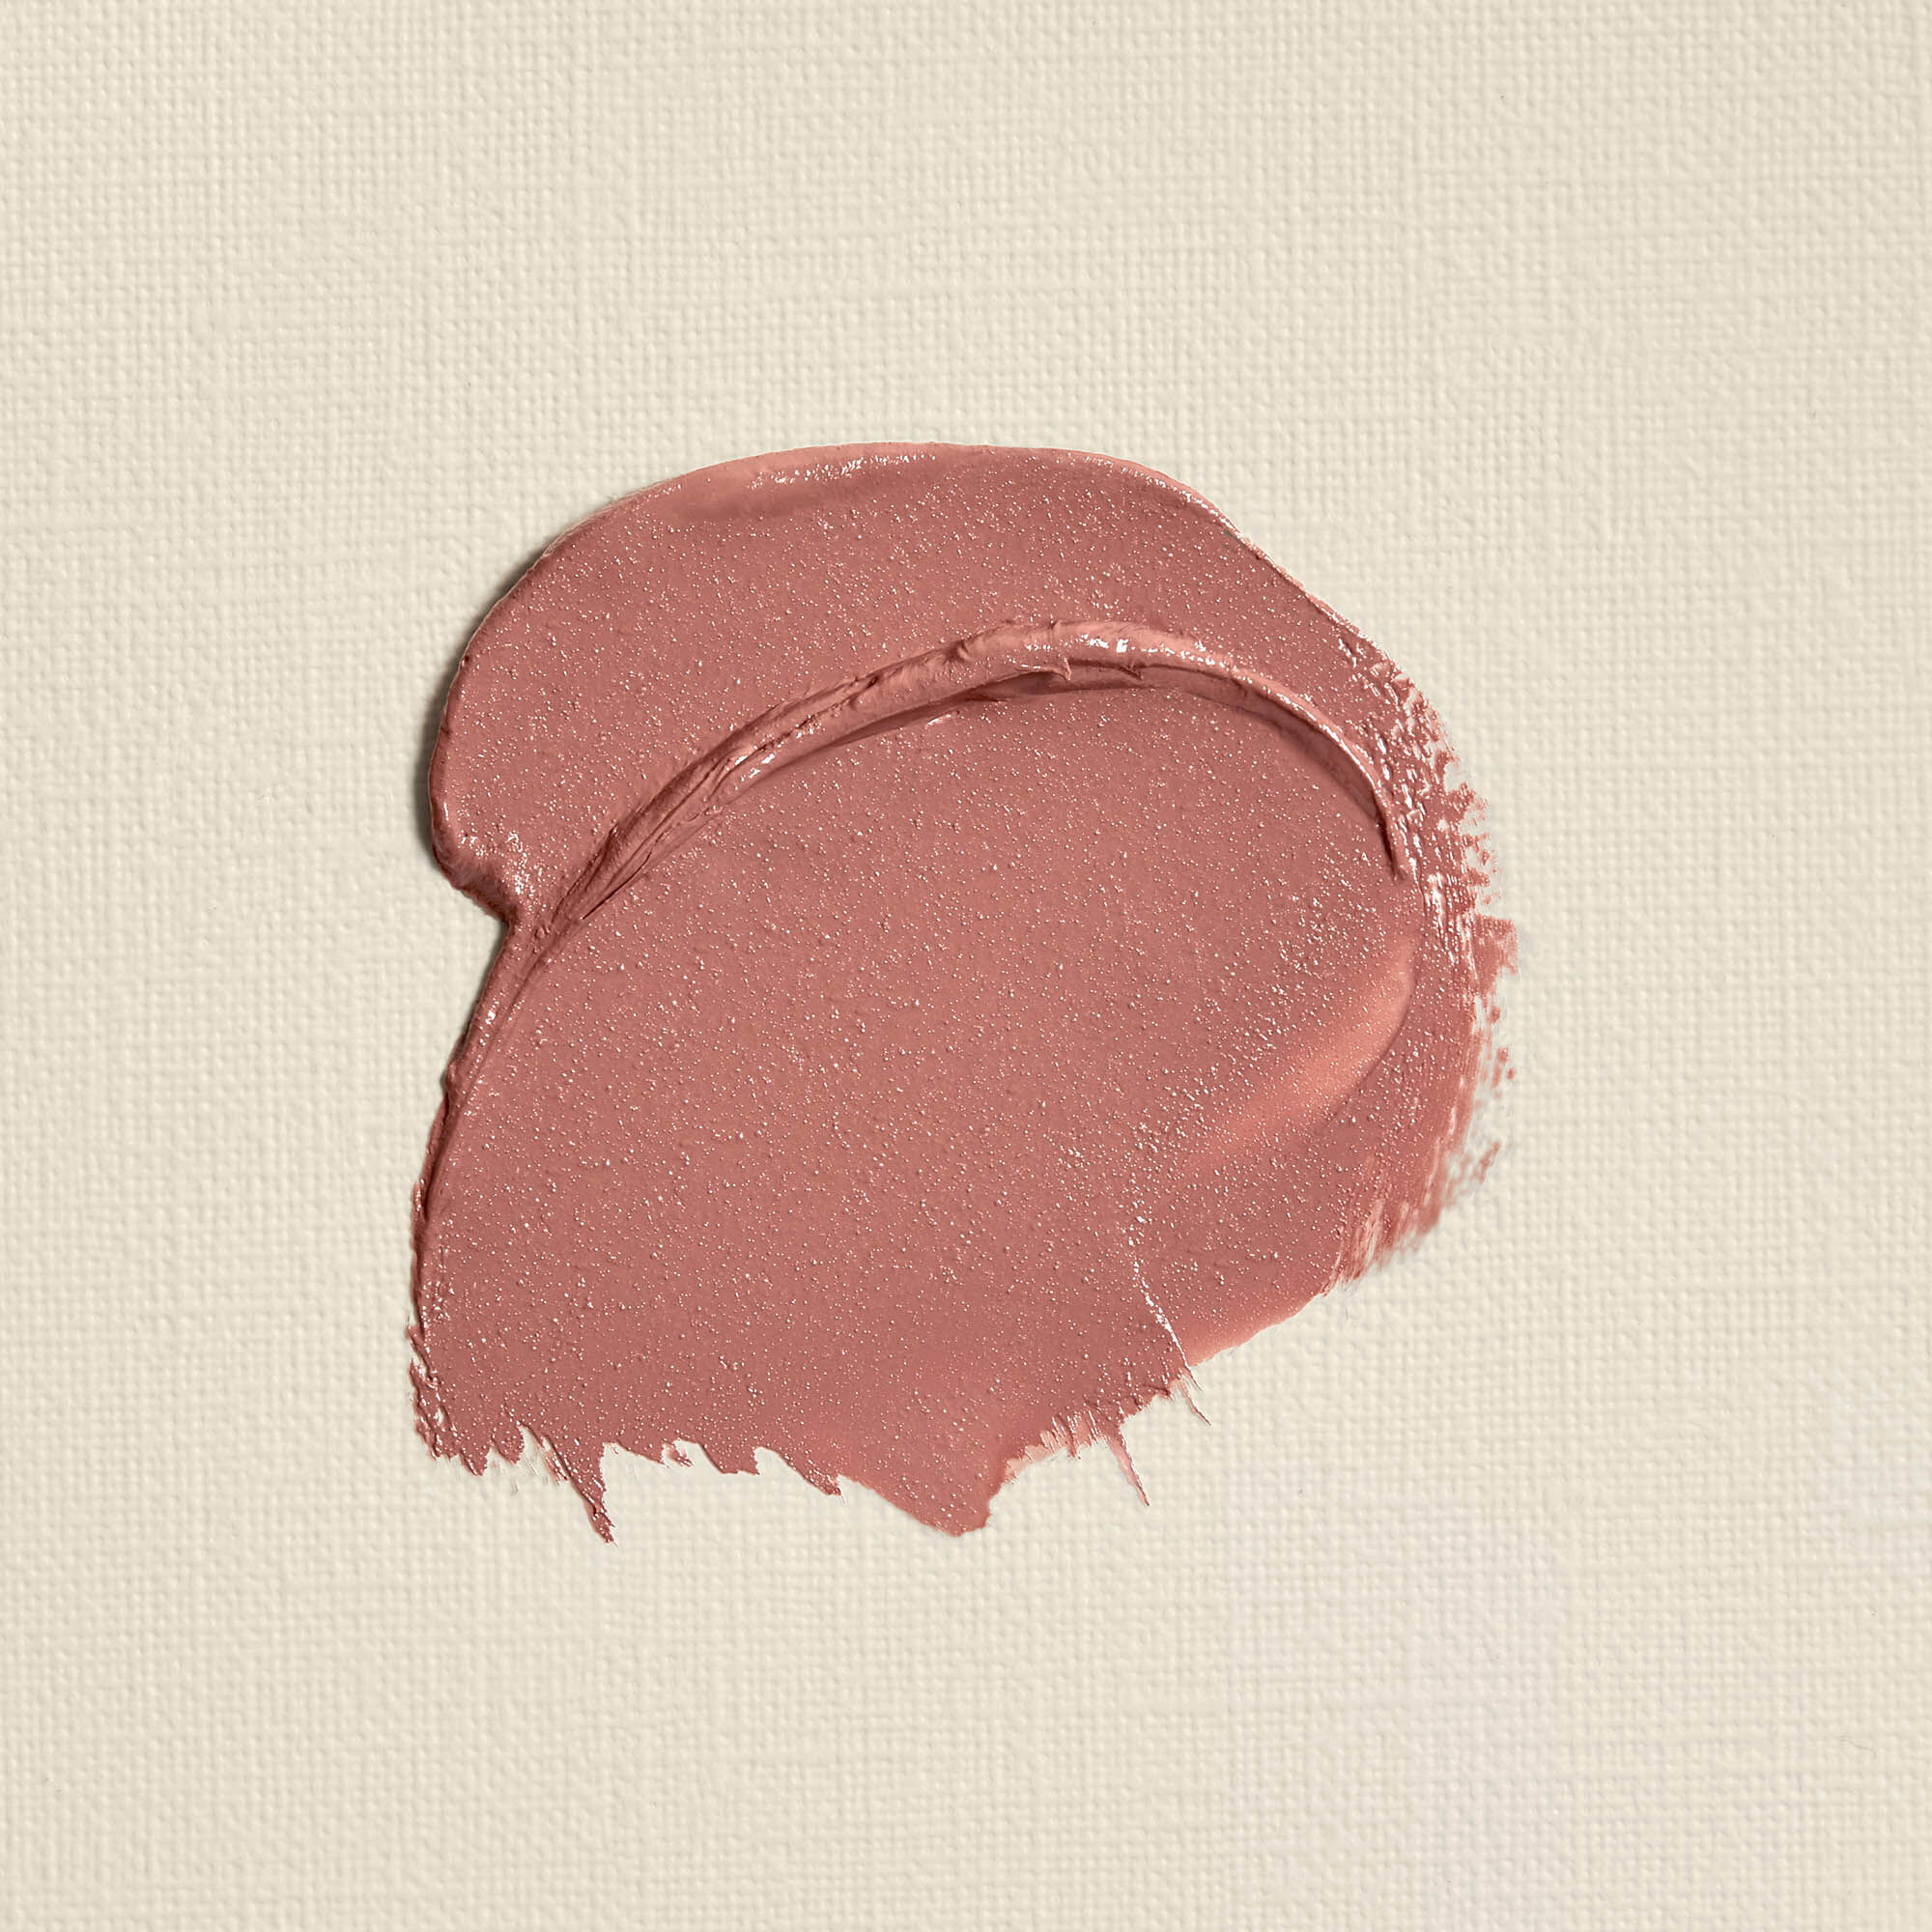 Creme Cheek + Lip Color, Rose Pink